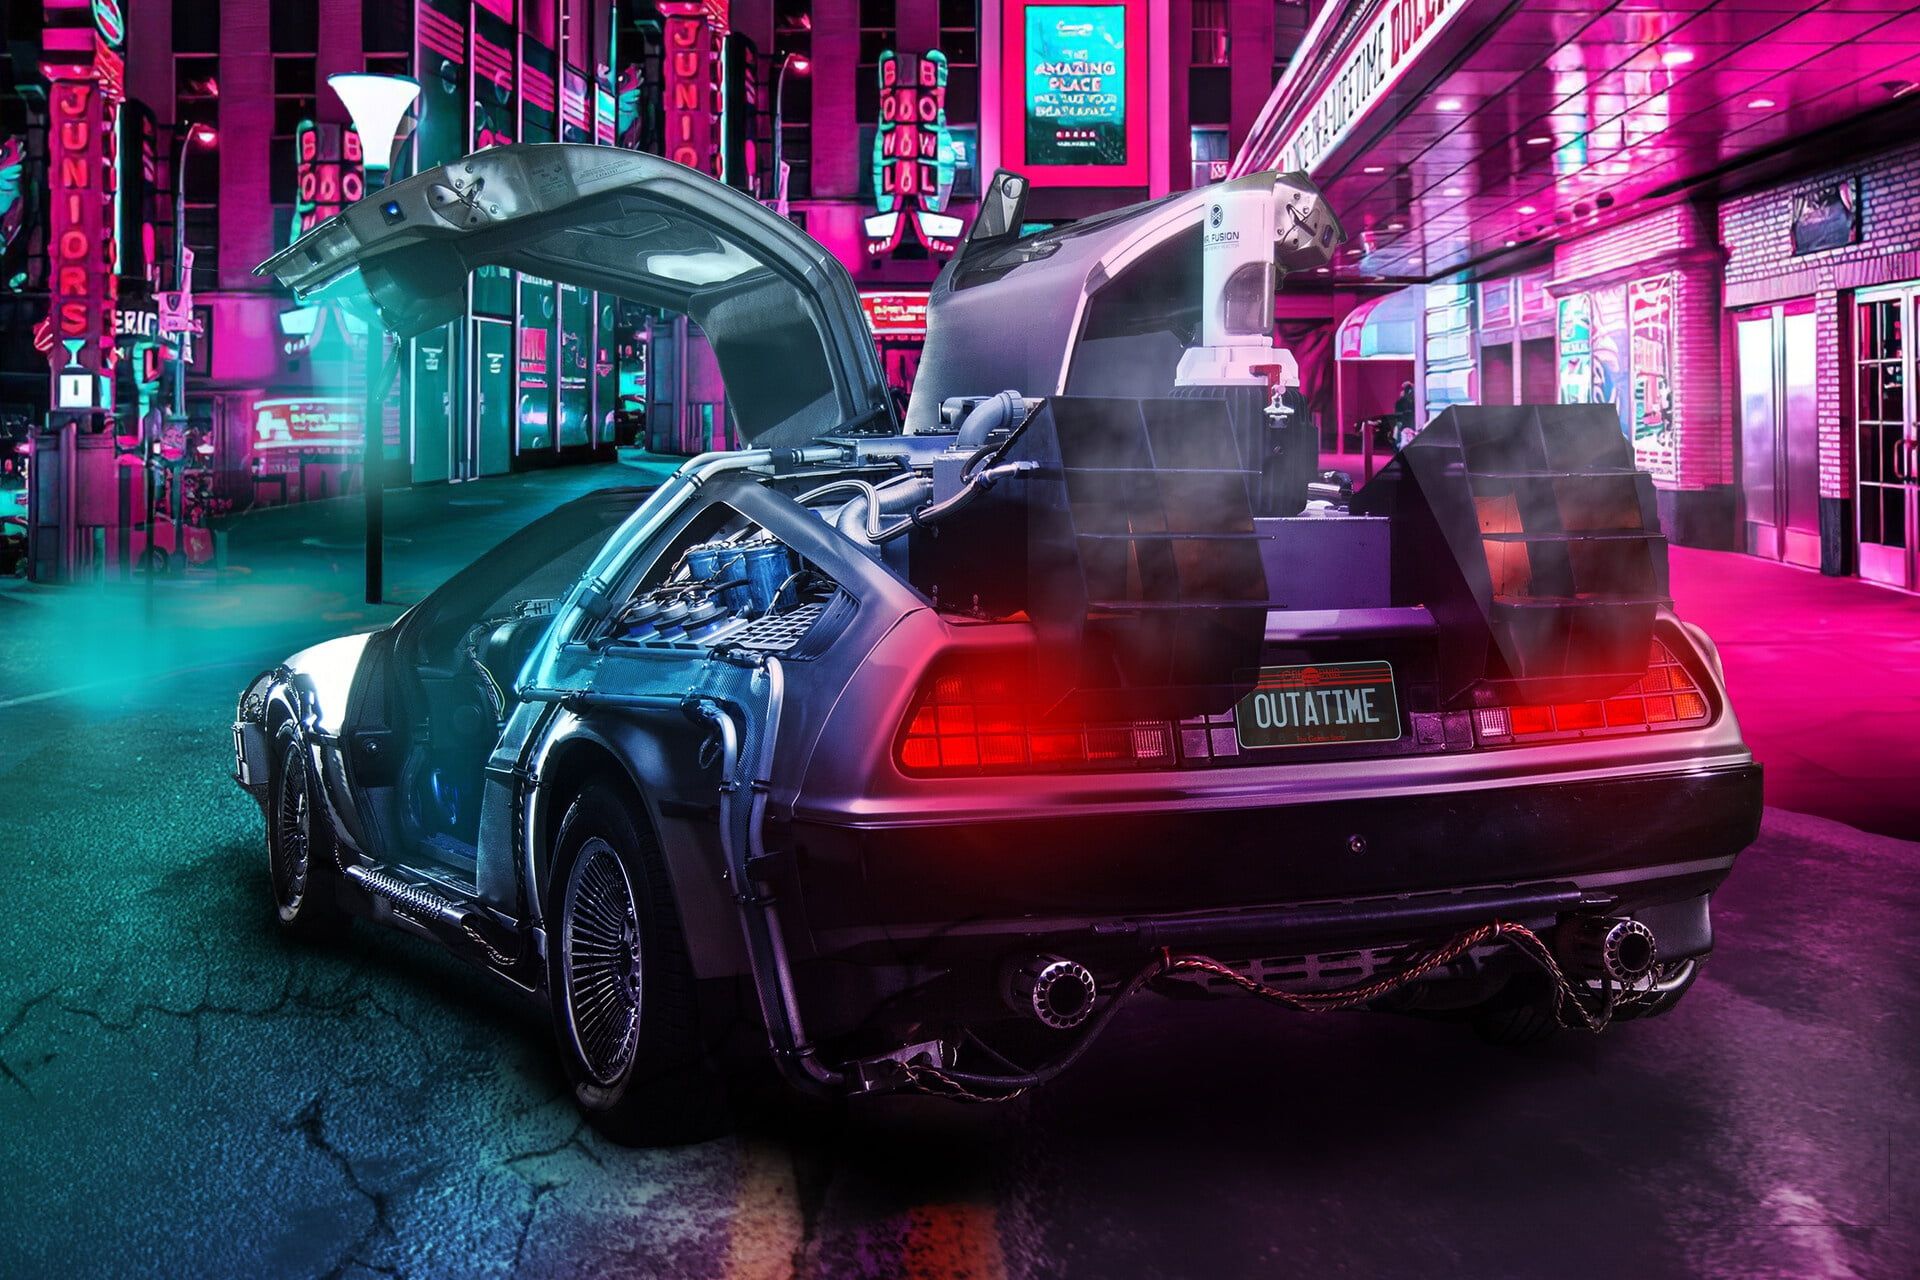 Time Machine #DeLorean #car #vehicle Back to the Future digital art P # wallpaper #hdwallpaper #desktop. Back to the future, Delorean, HD wallpaper